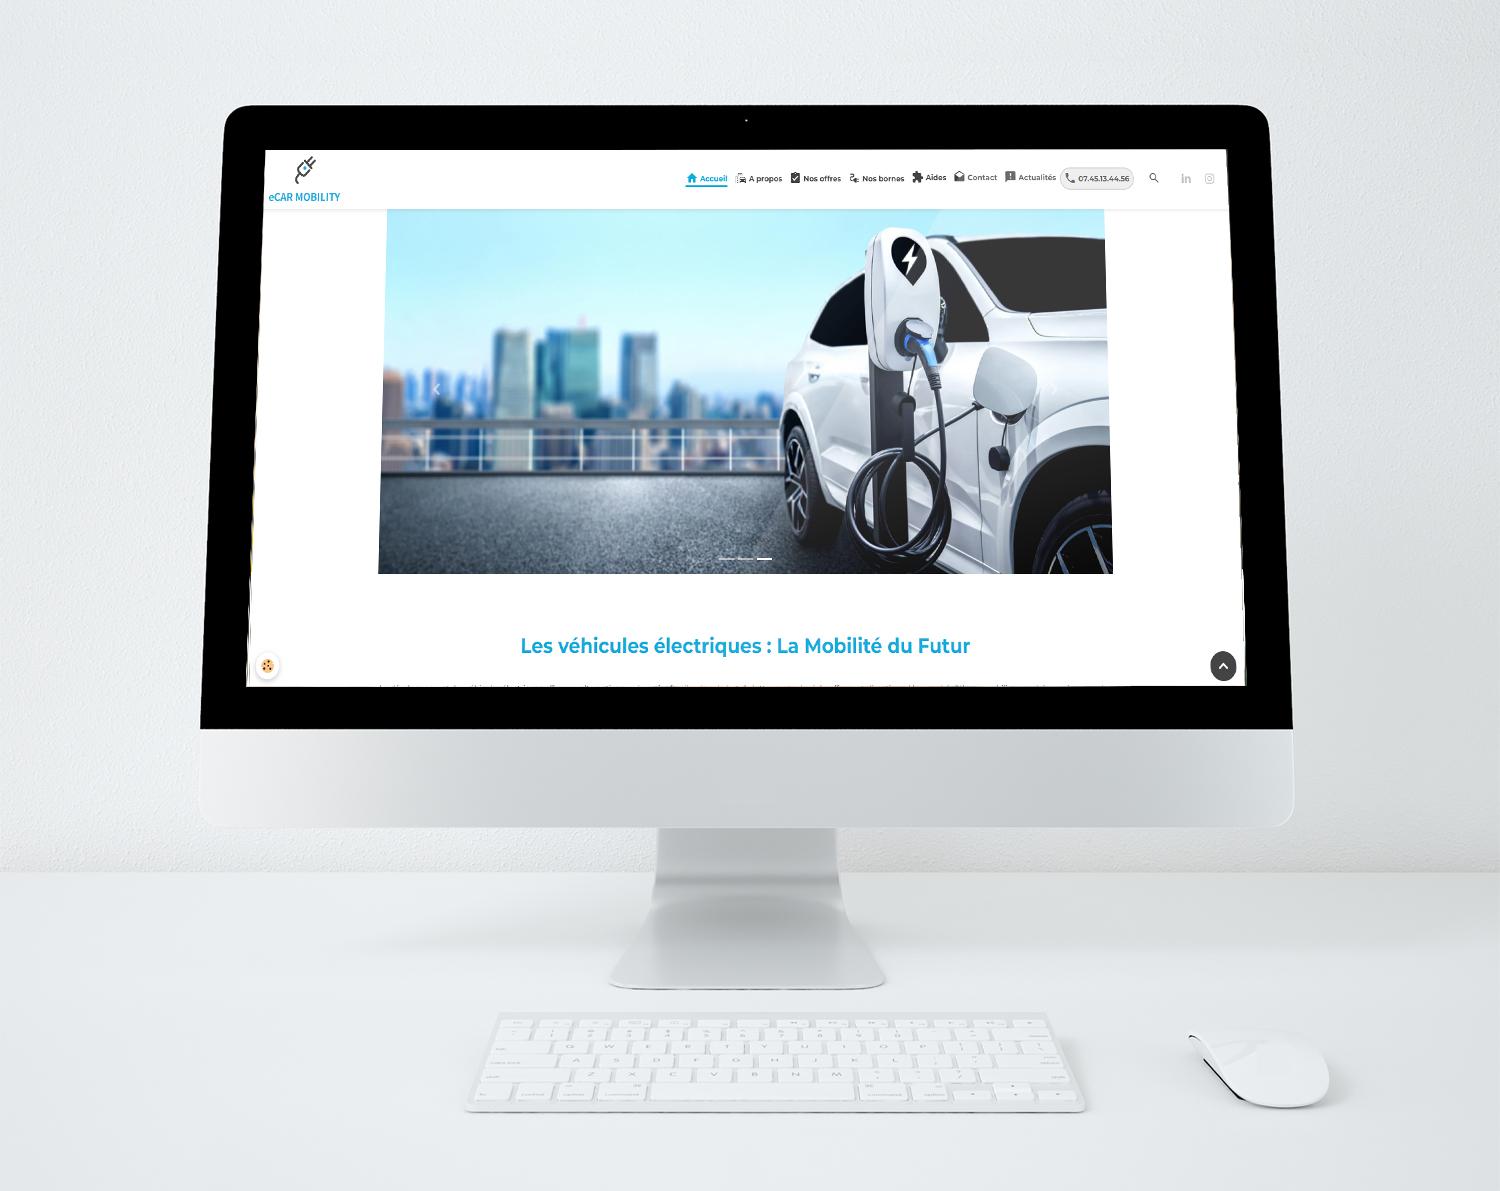 Ecar mobility sites web